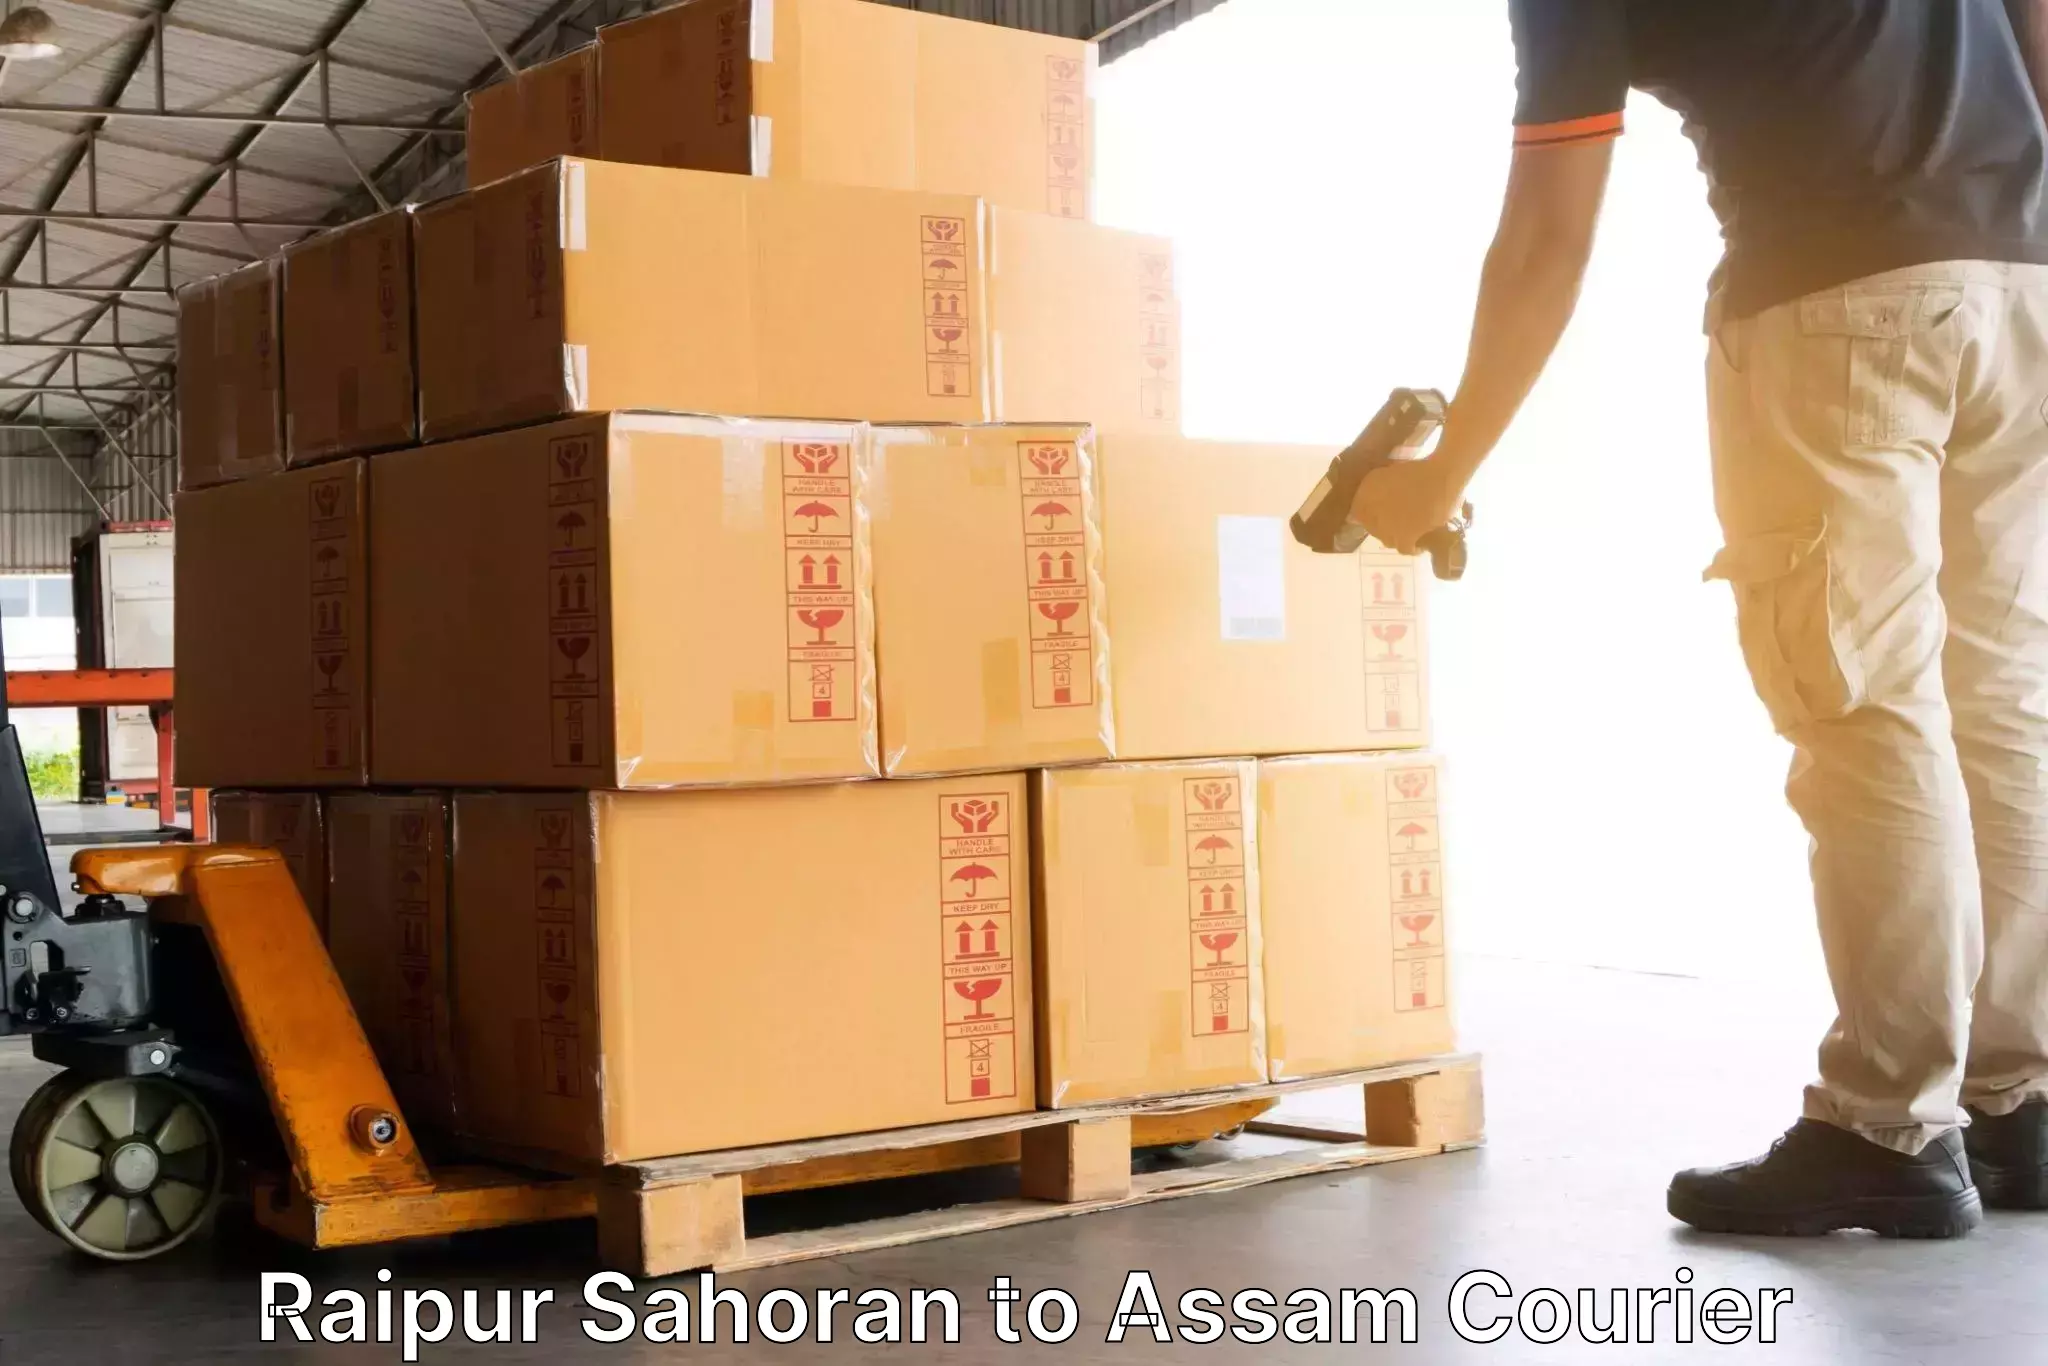 Urgent courier needs Raipur Sahoran to Guwahati